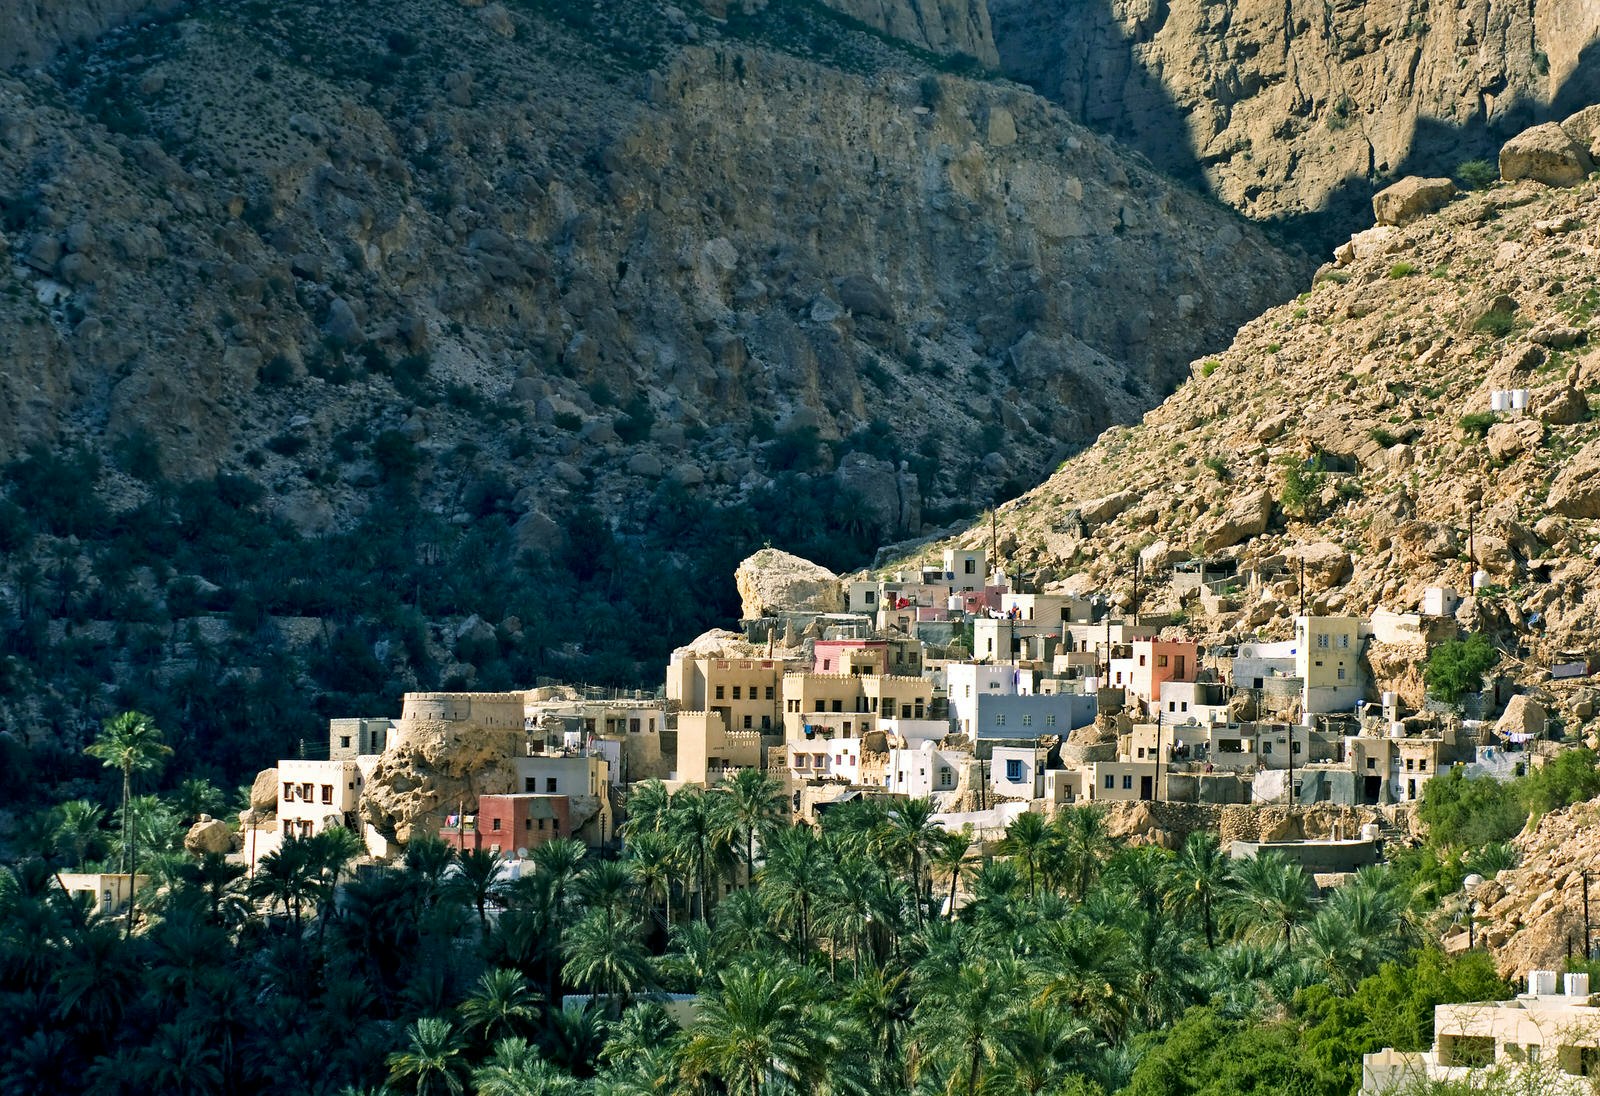 A mountain village in Wadi Bani Awf, Oman. Image by Byelikova Oksana / Shutterstock